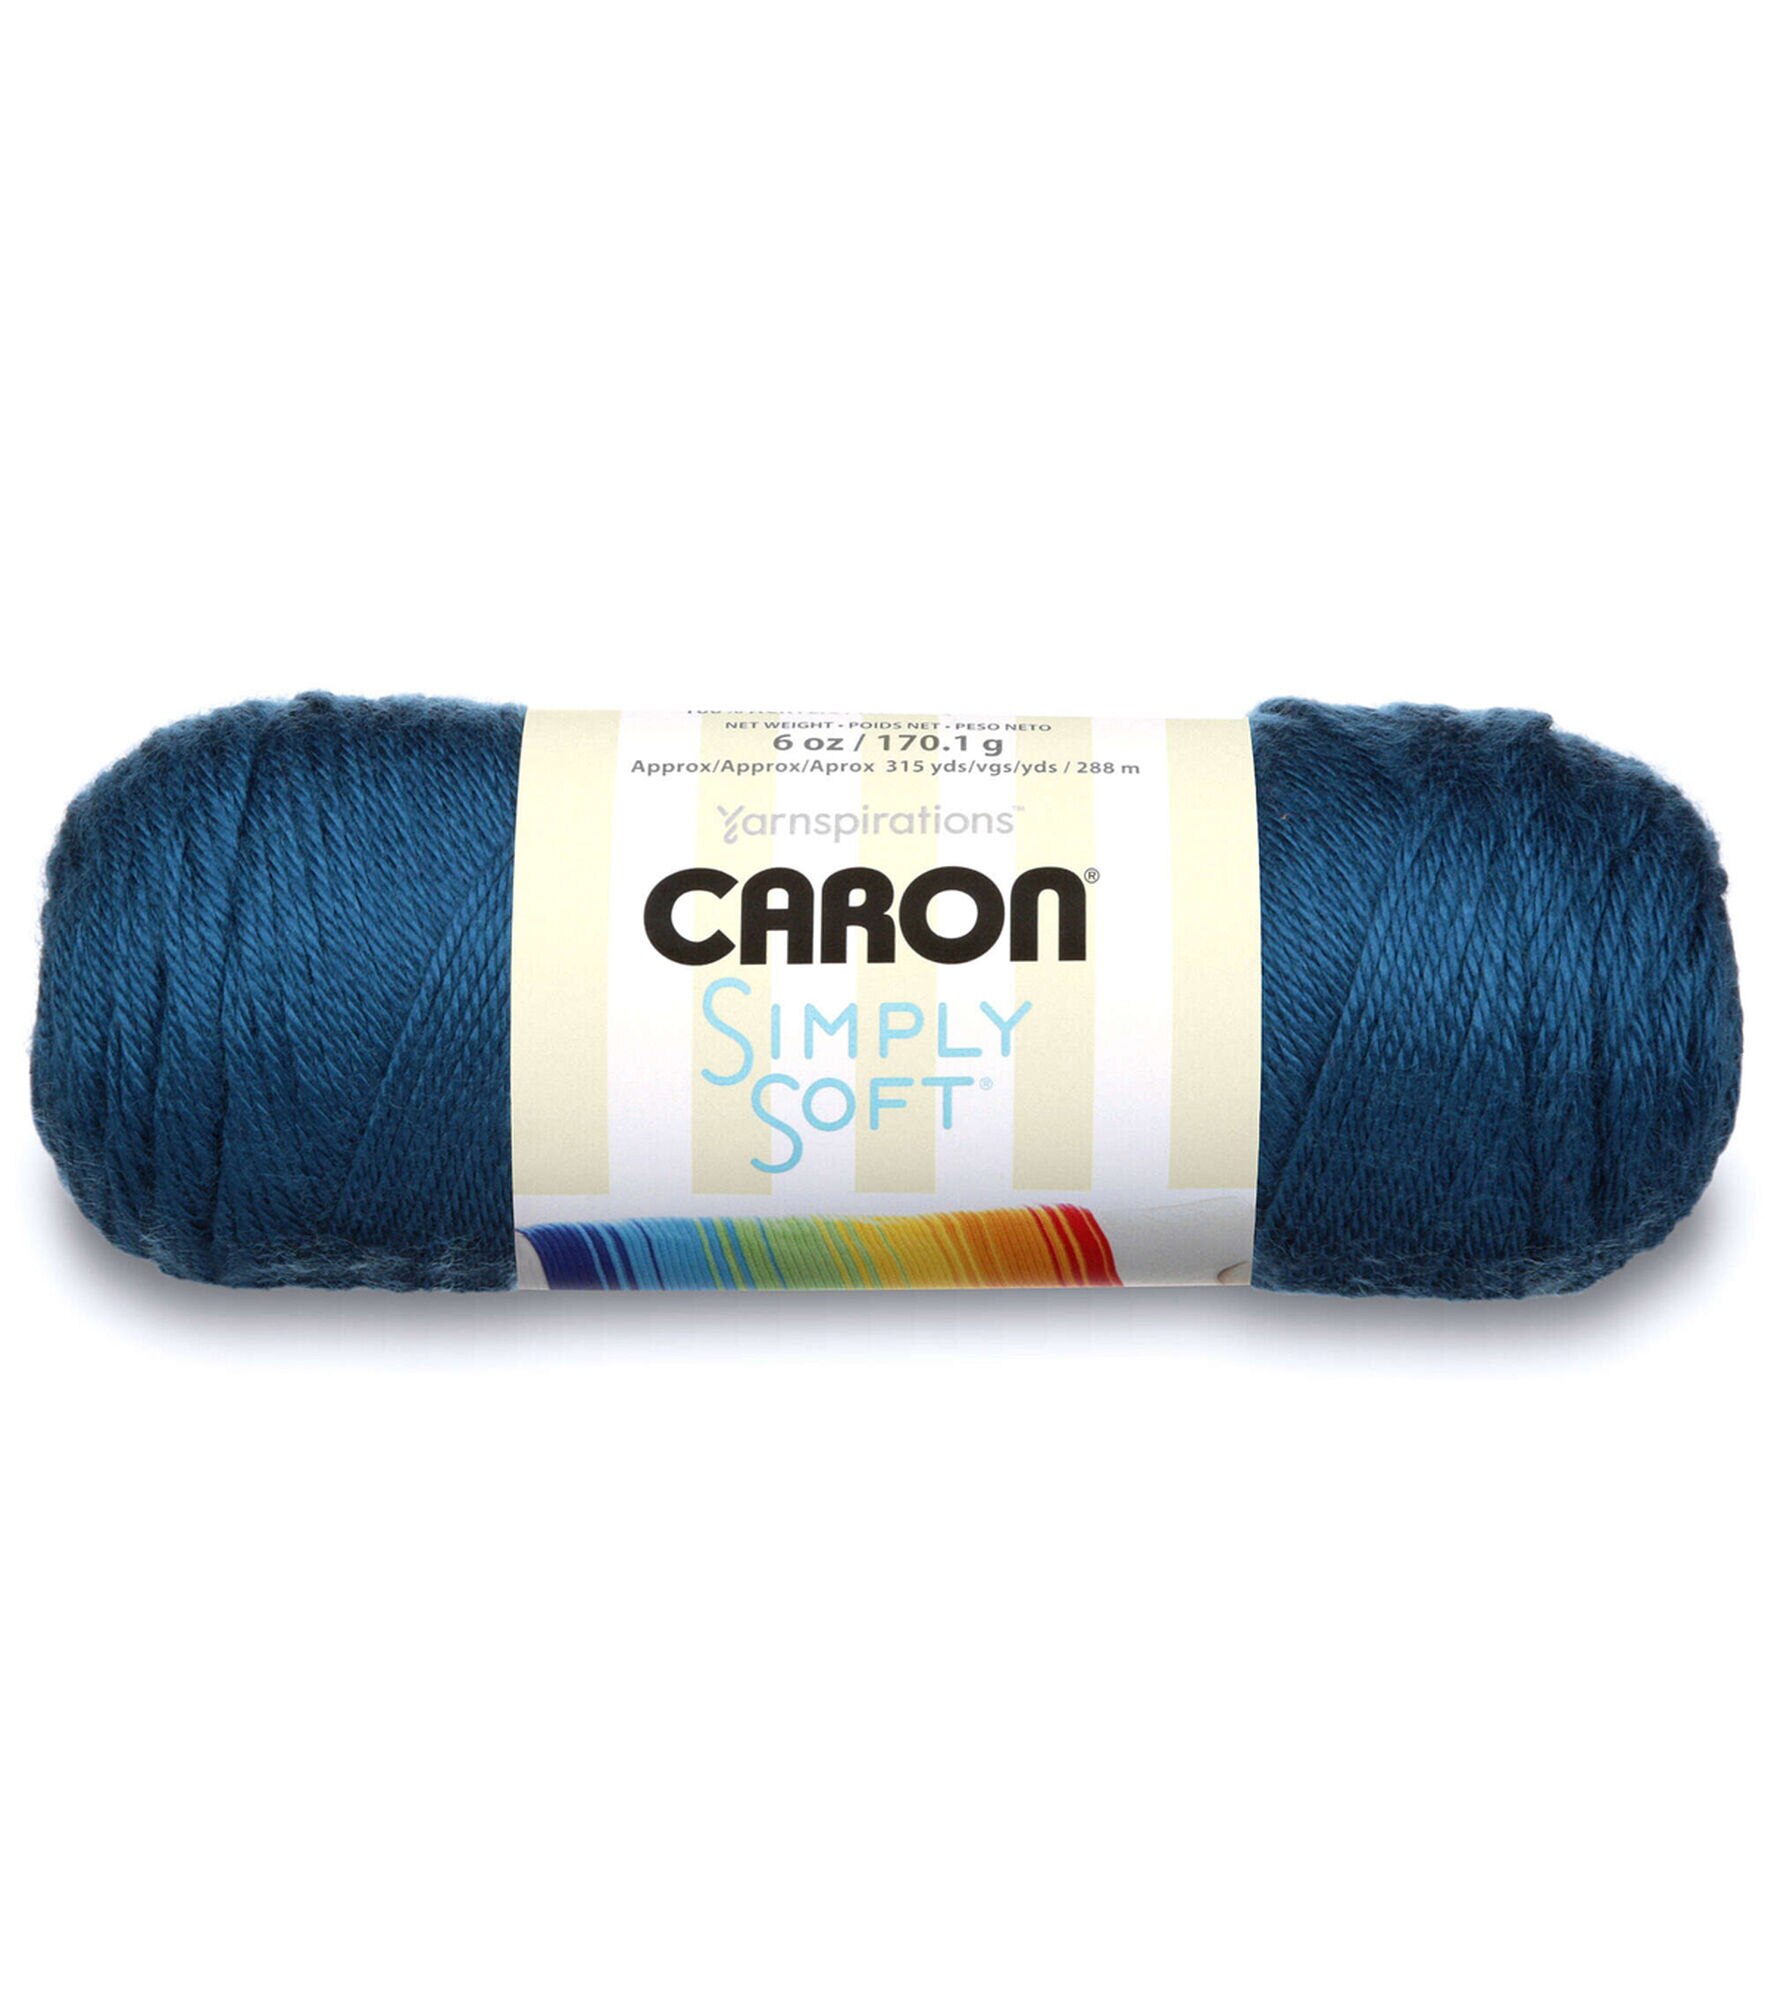 Lion Brand Basic Stitch Anti Pilling Yarn, JOANN in 2023